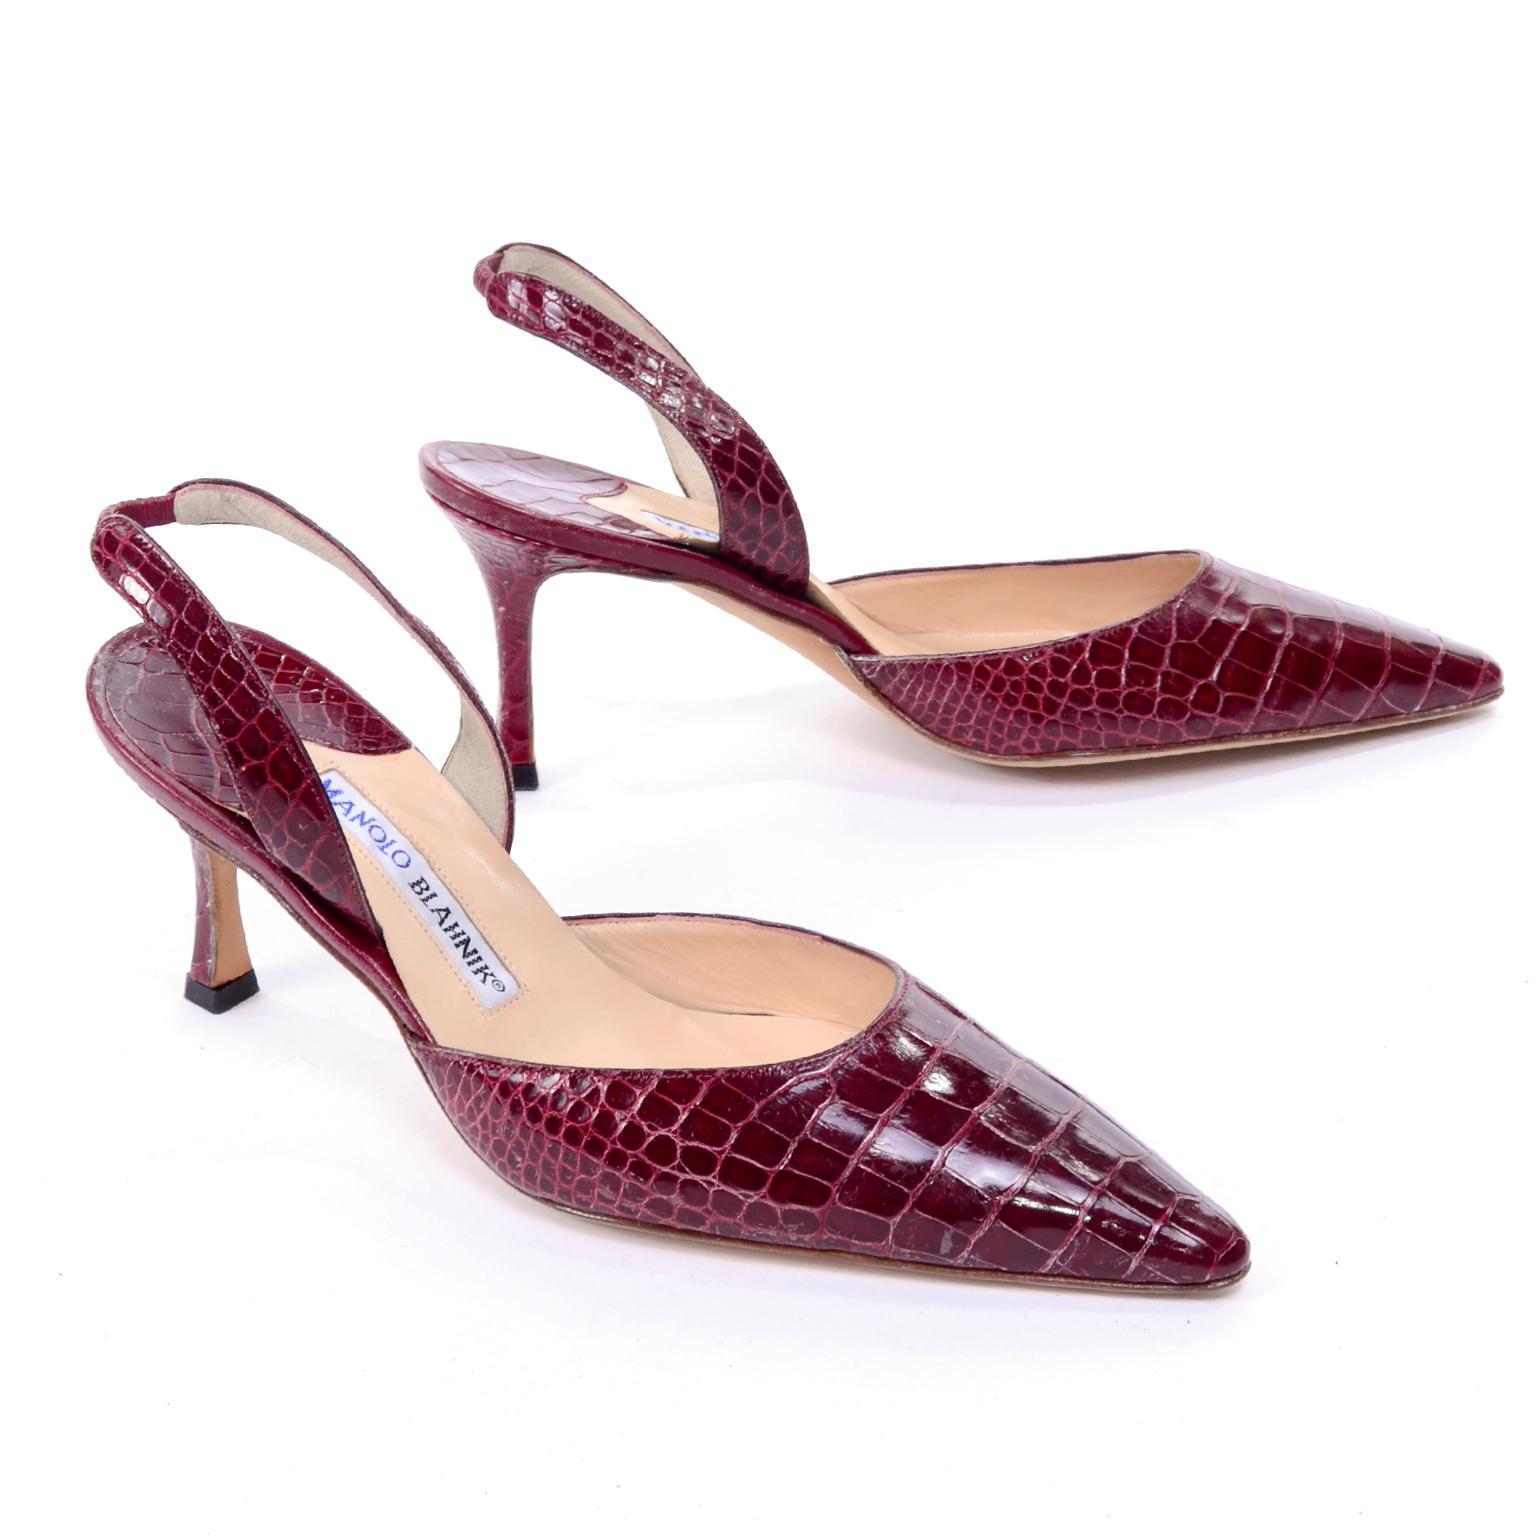 Manolo Blahnik Shoes Burgundy Crocodile Sling Back Heels 38.5 Size 8 1